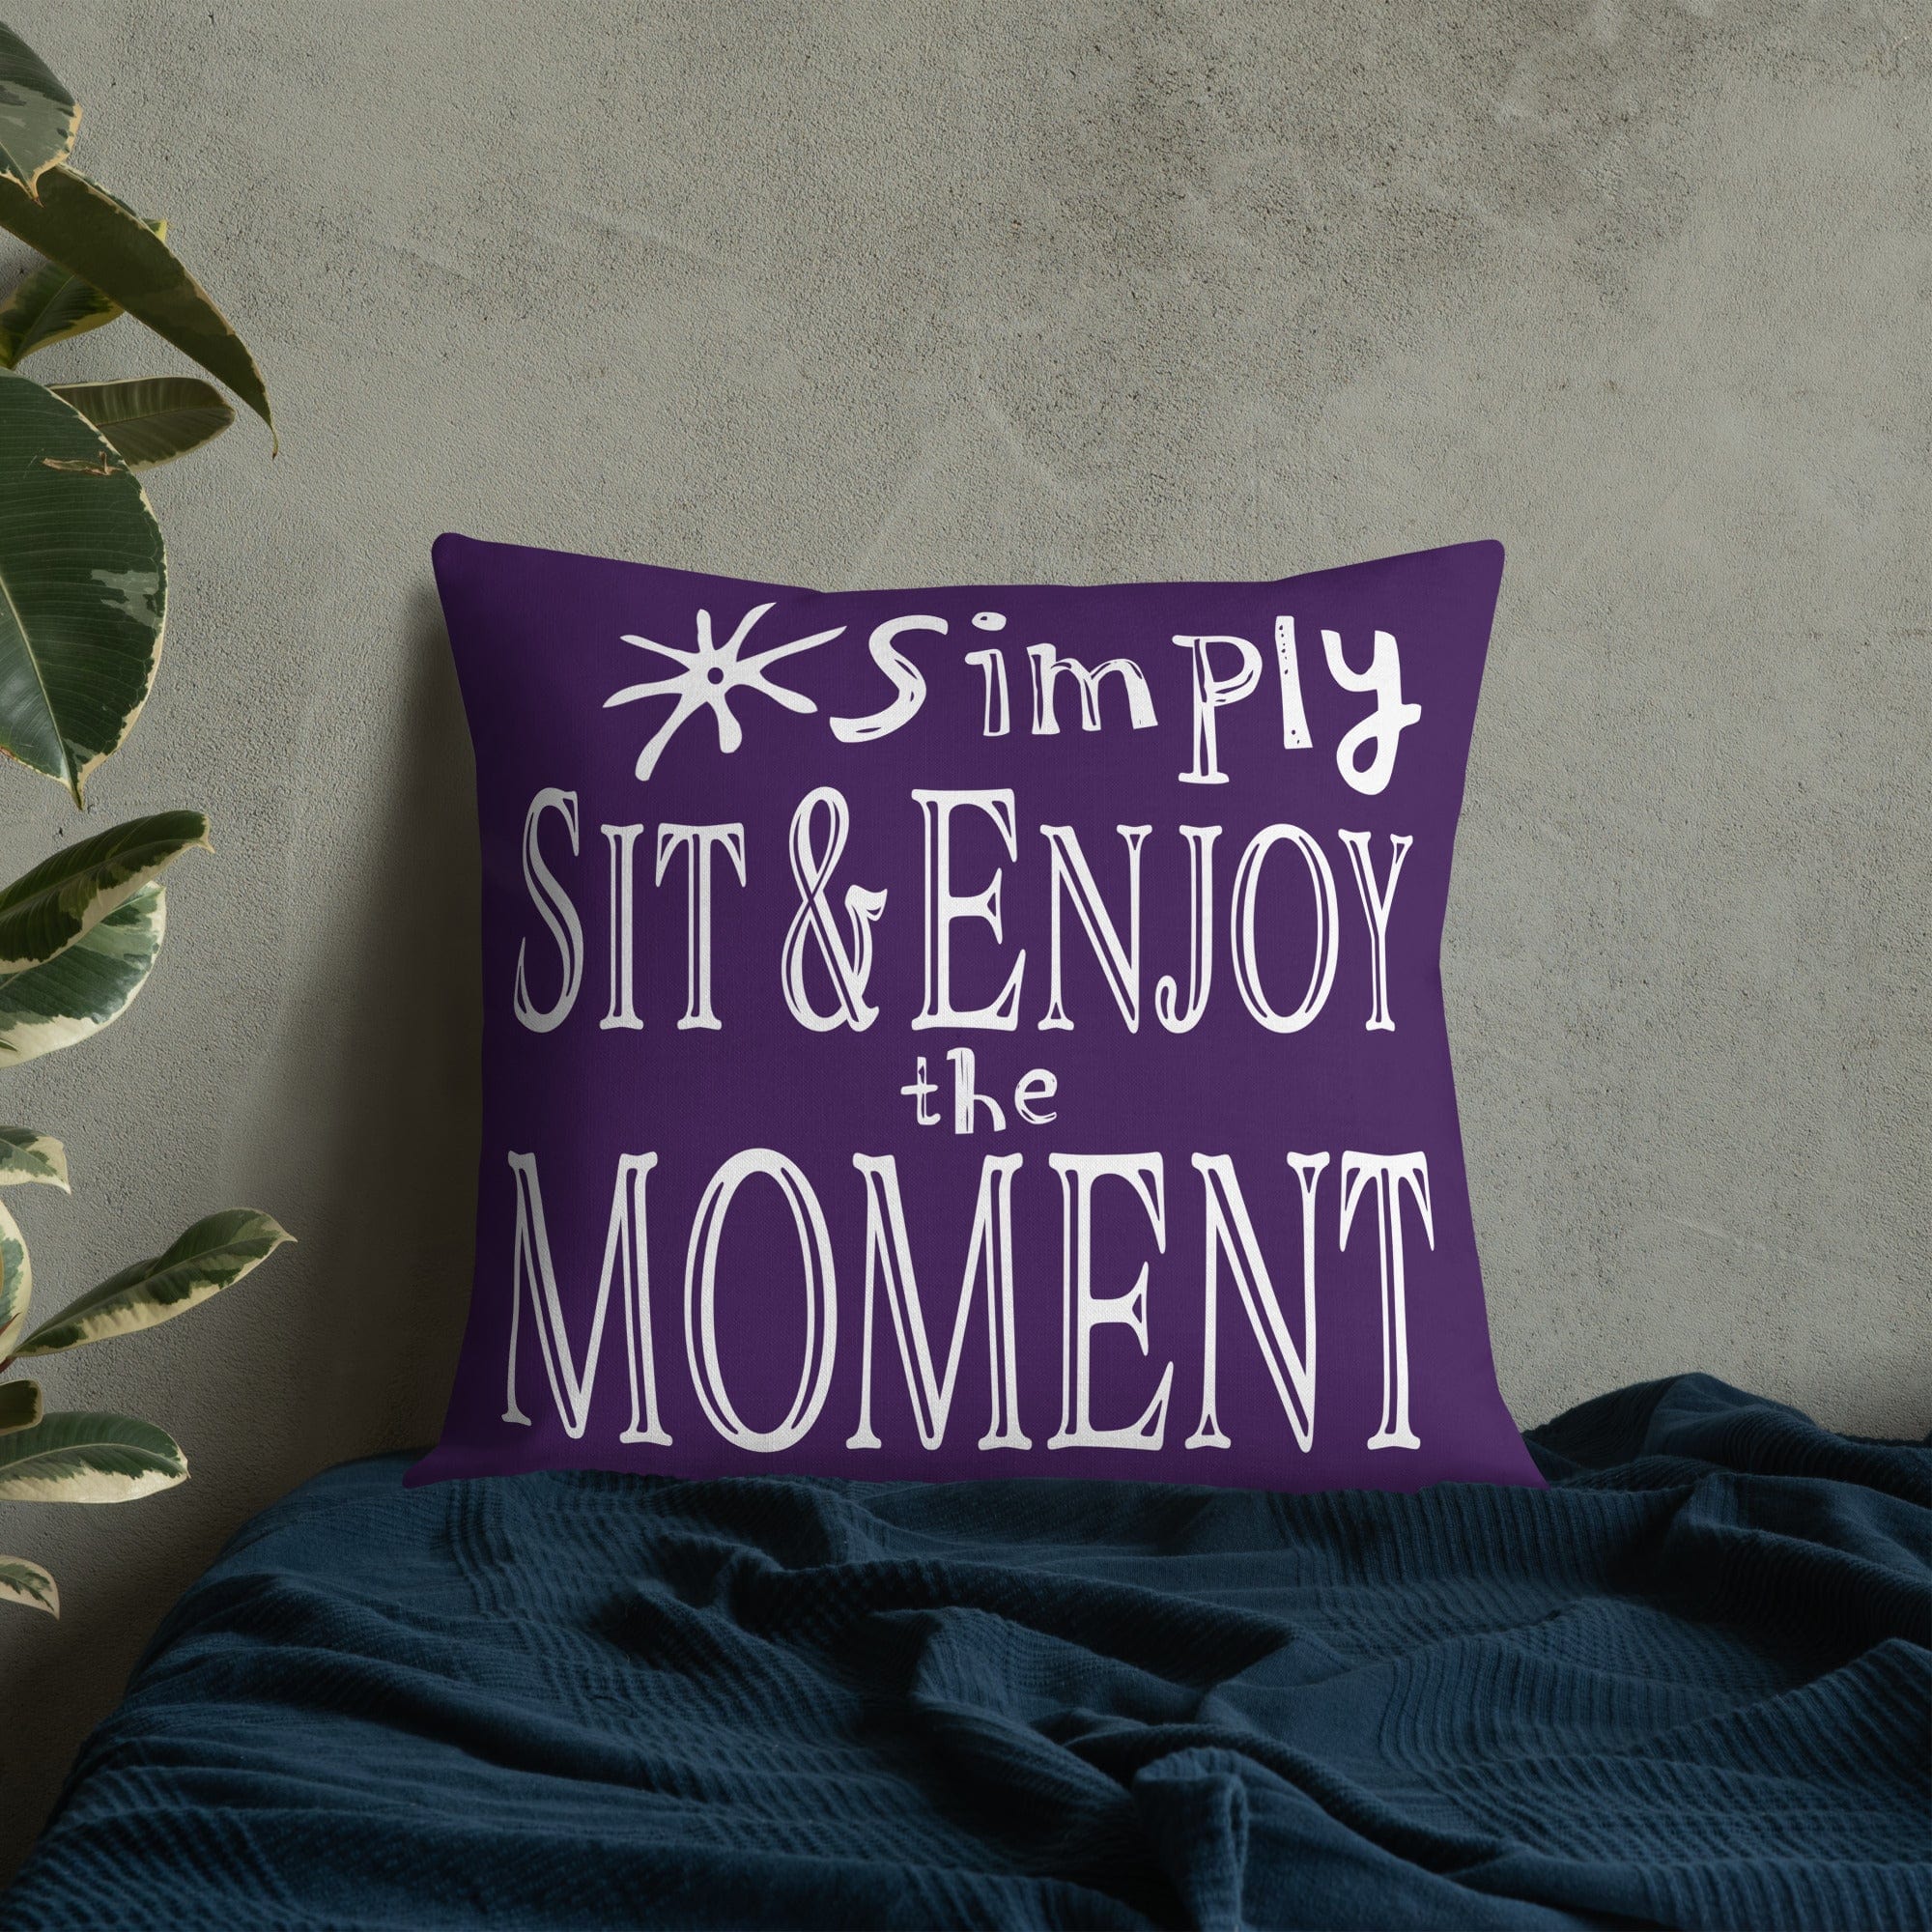 Shop Simply Sit & Enjoy the Moment Mindfulness Decorative Pillow - Purple, Throw Pillows, USA Boutique